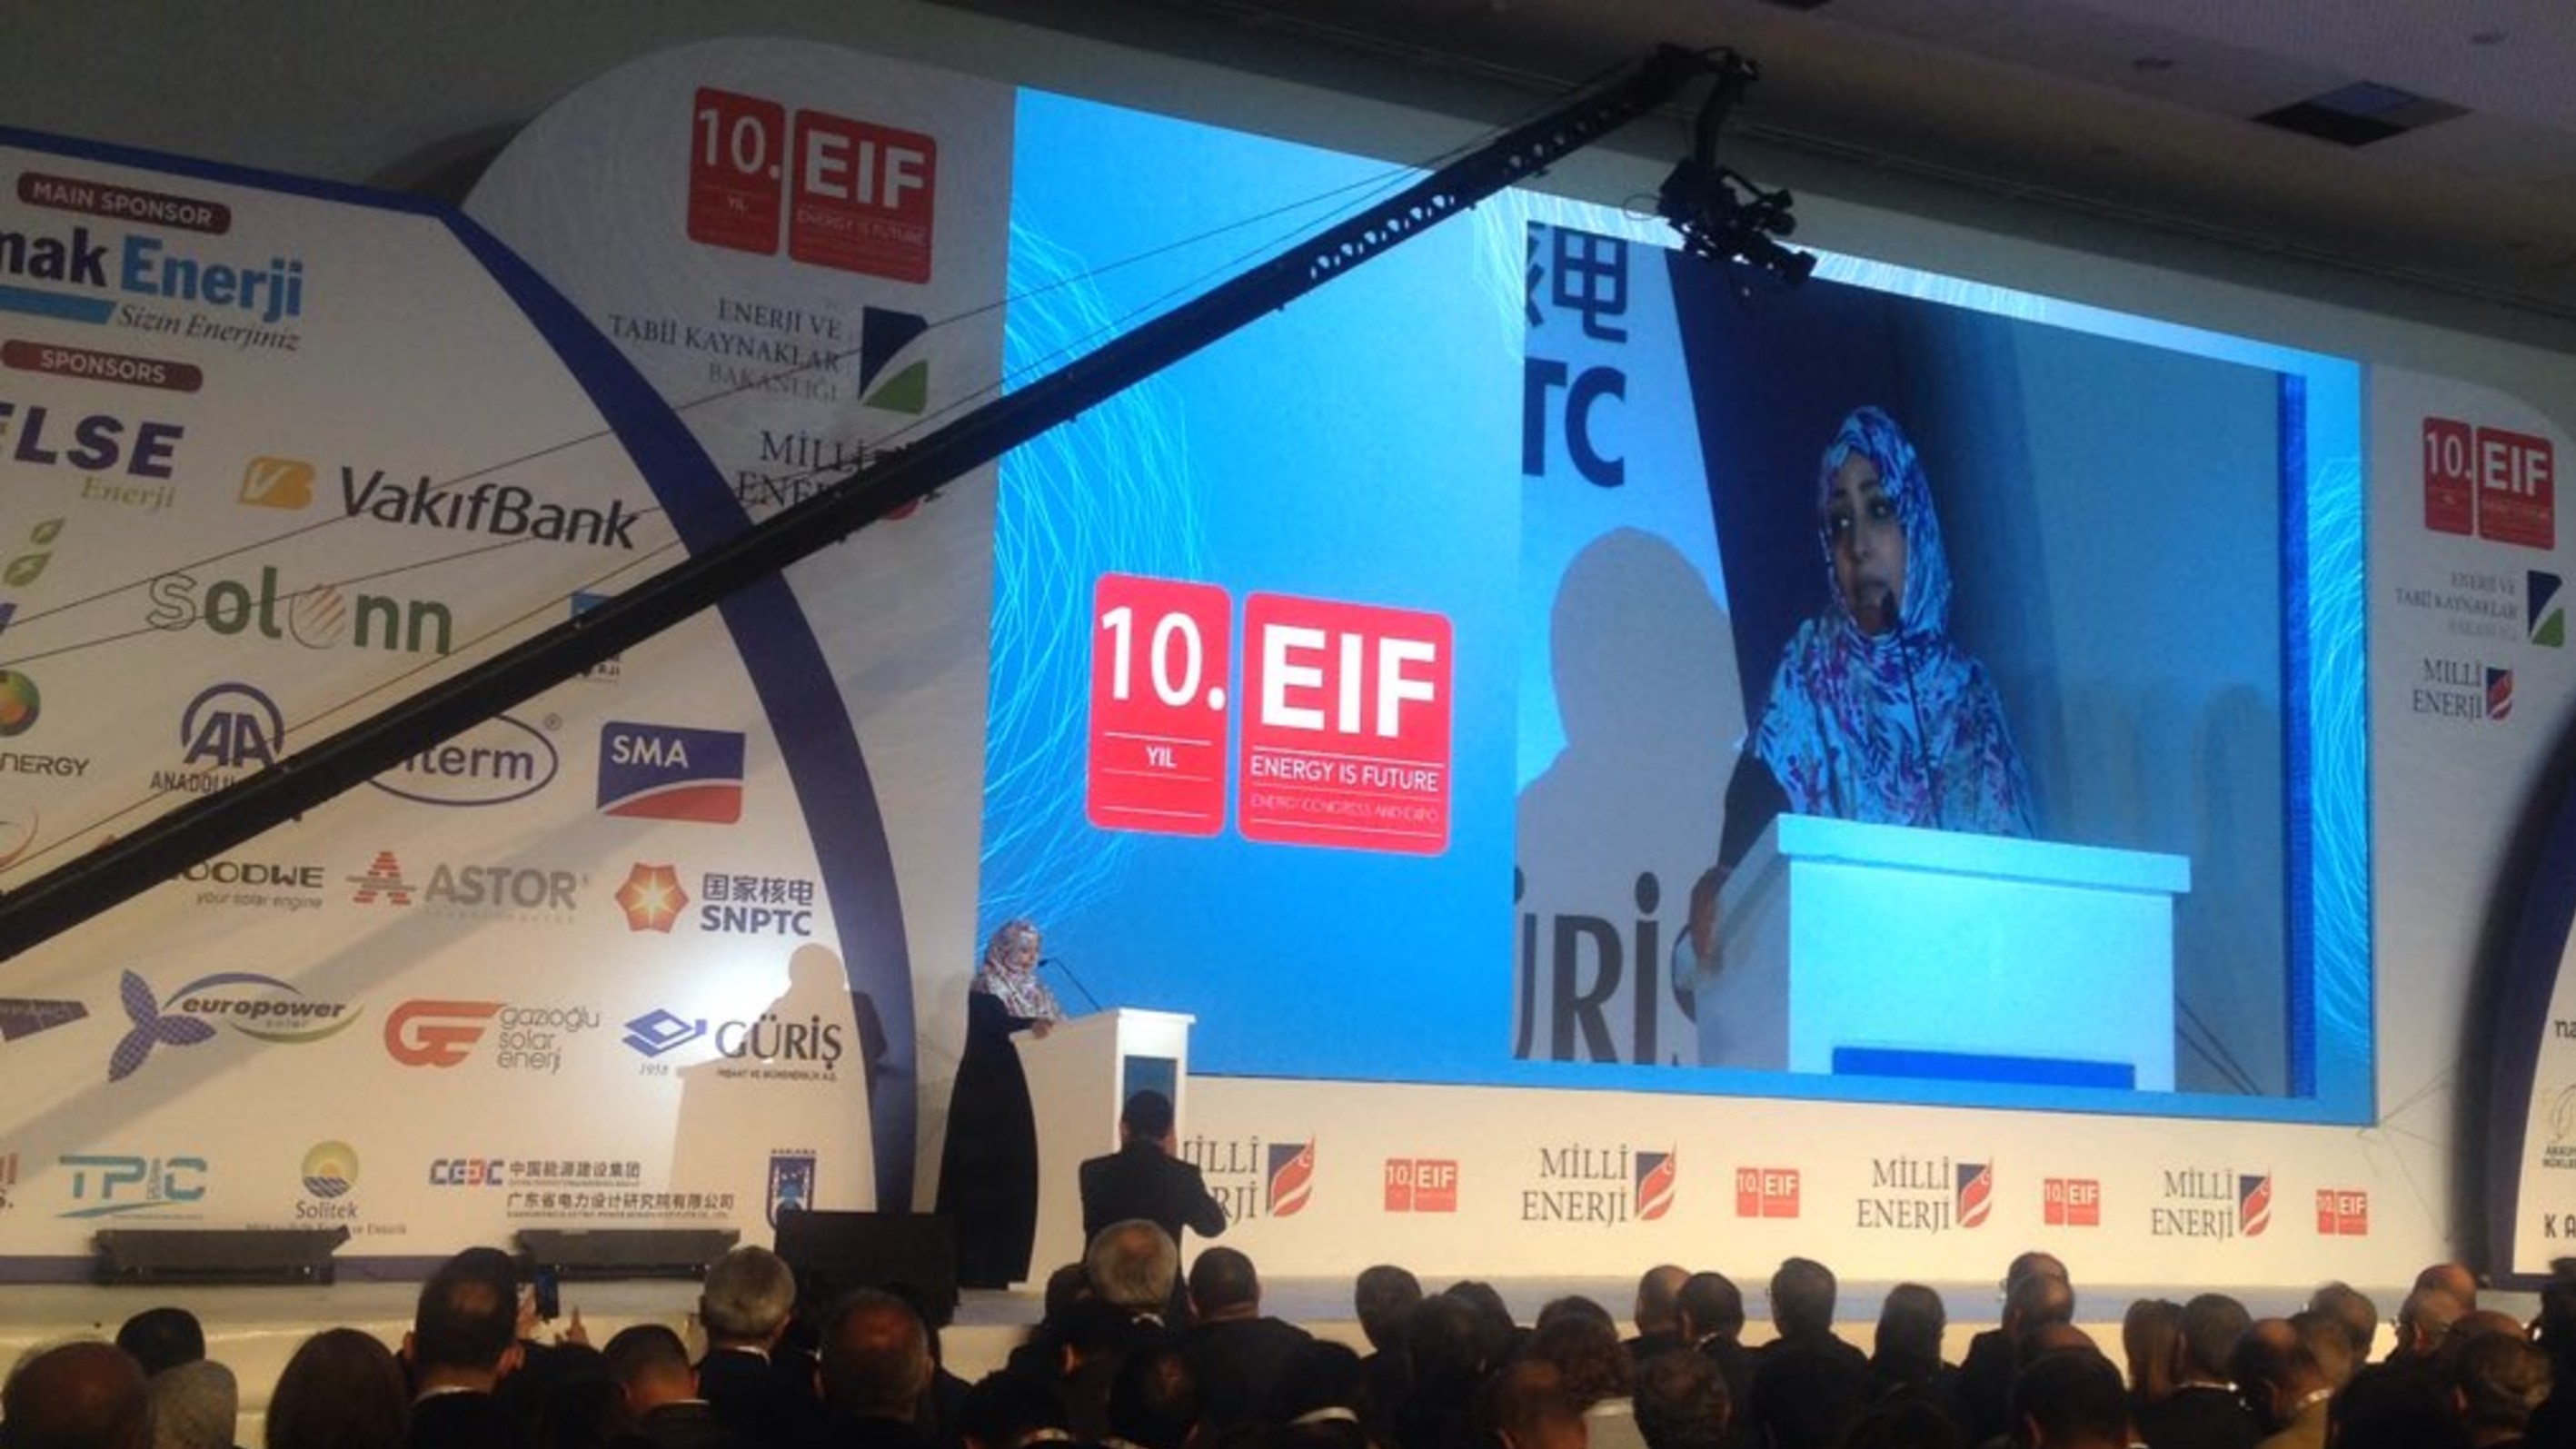 Nobel Peace Laureate’s Speech at International Energy Congress and Expo (EIF 2017) in Ankara